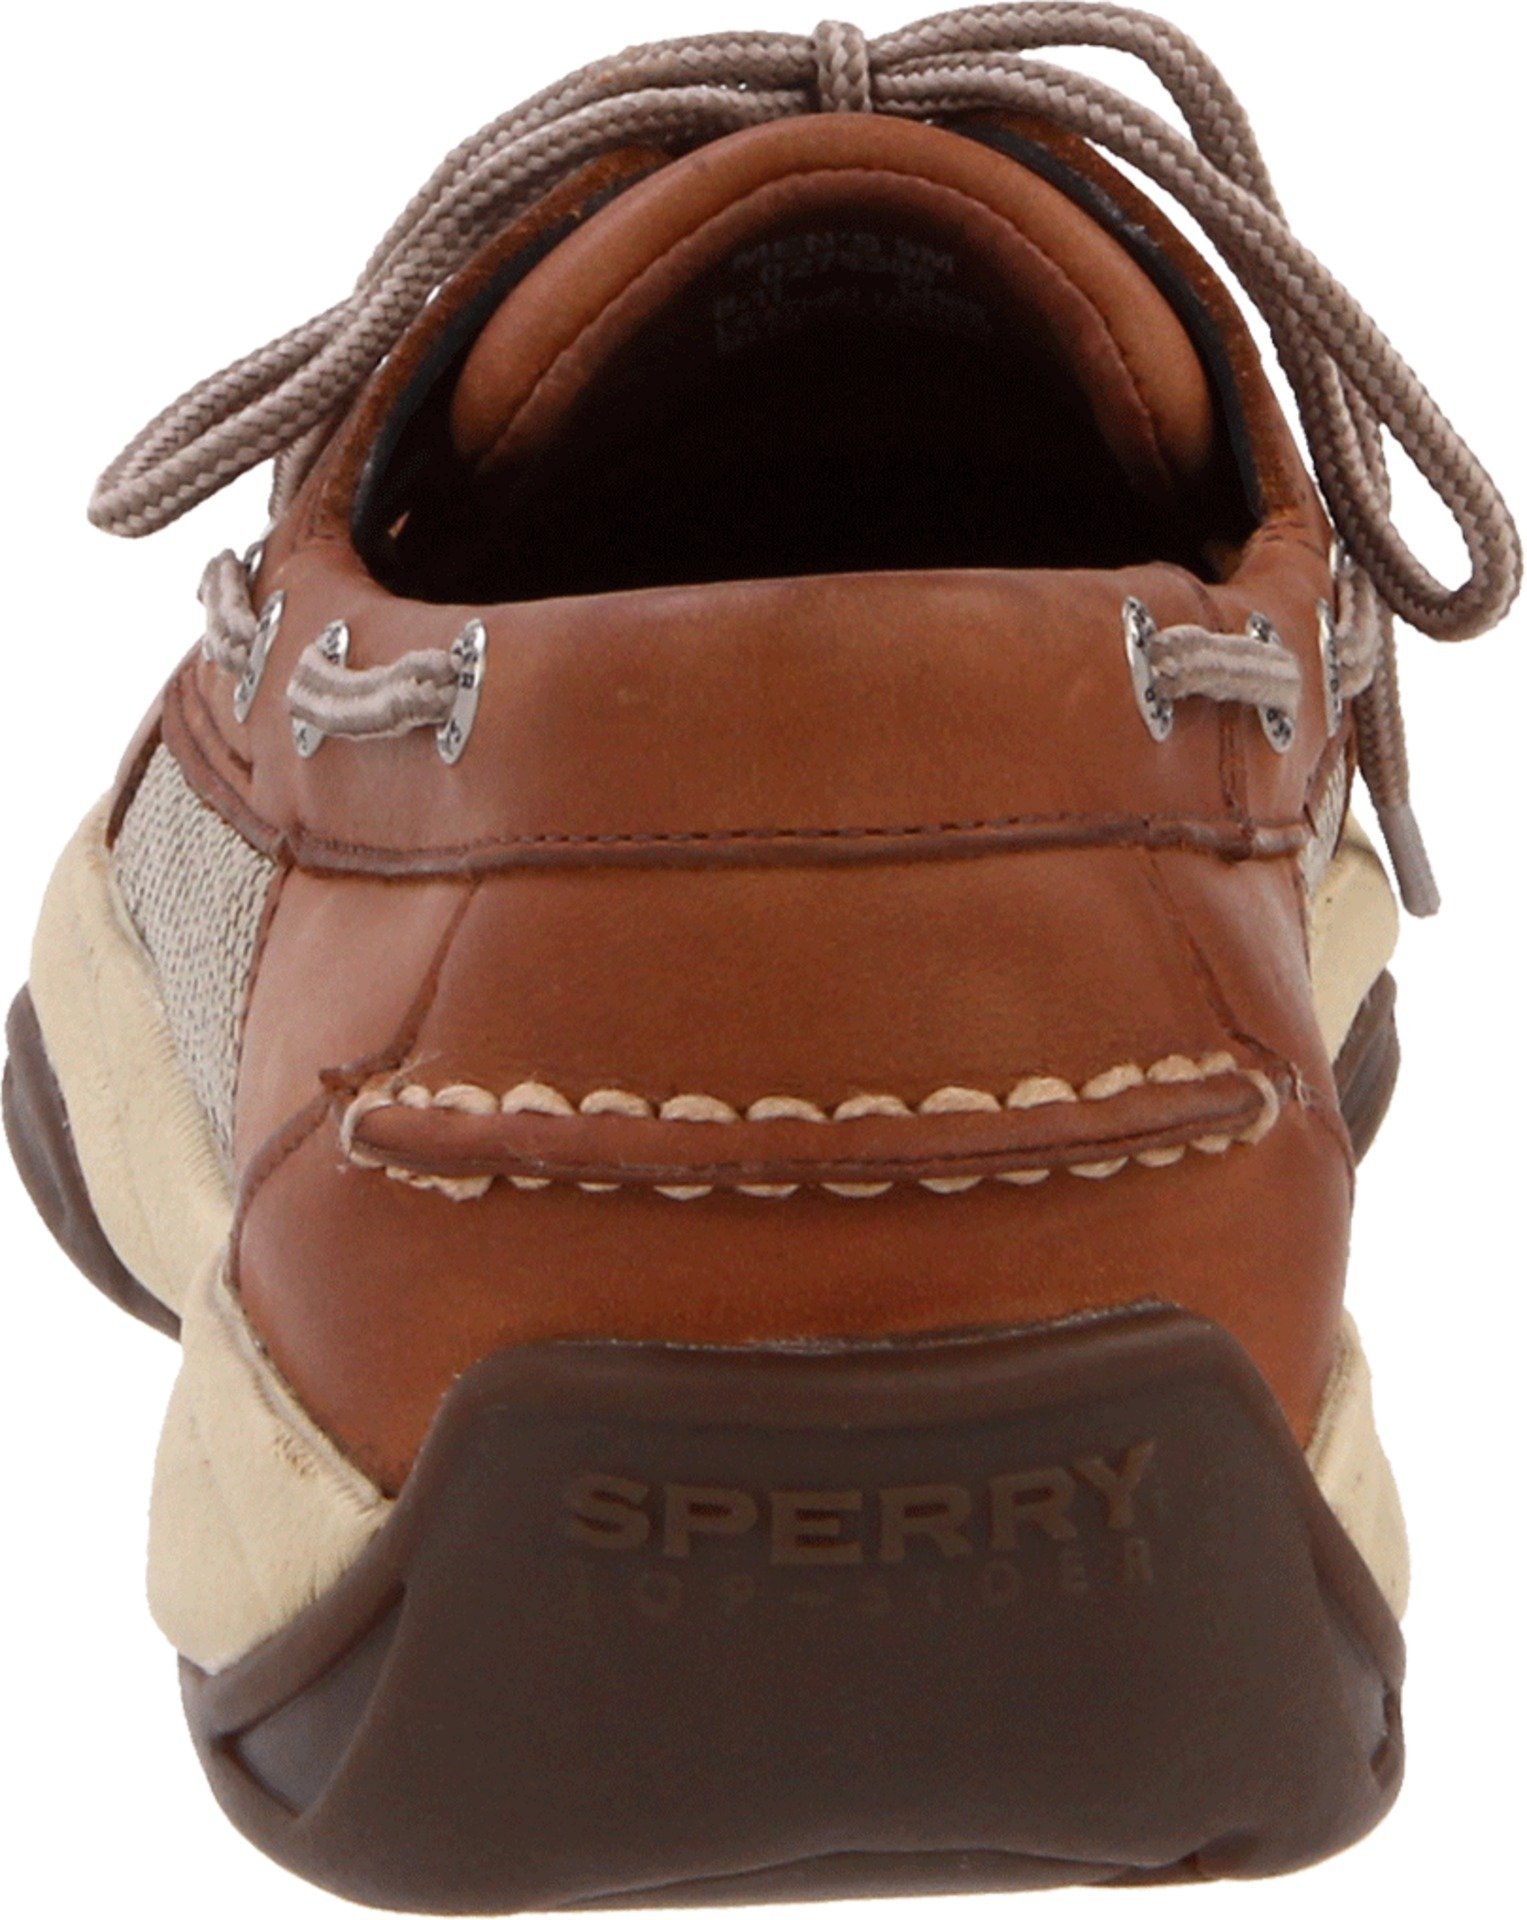 Sperry Mens Intrepid 2-Eye Casual Shoes - Brown